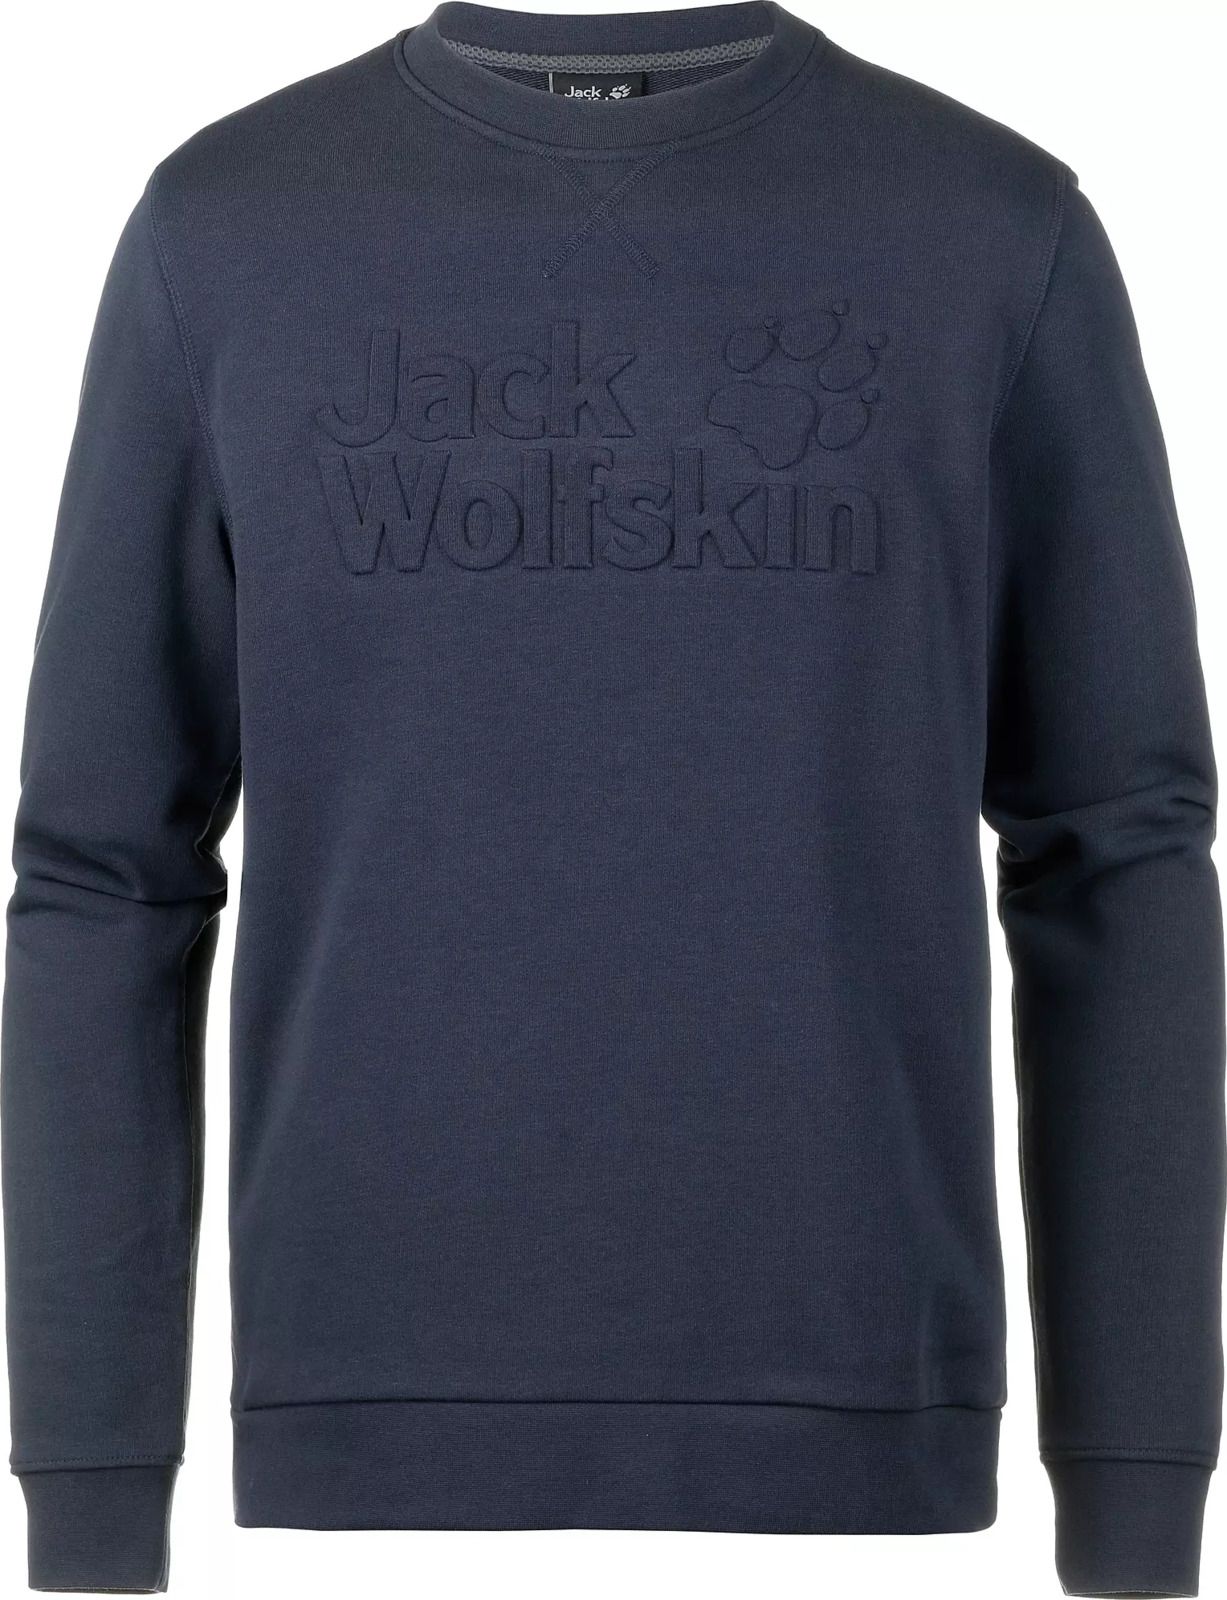   Jack Wolfskin Logo Sweatshirt M, : -. 5018891-1010.  XXL (54)